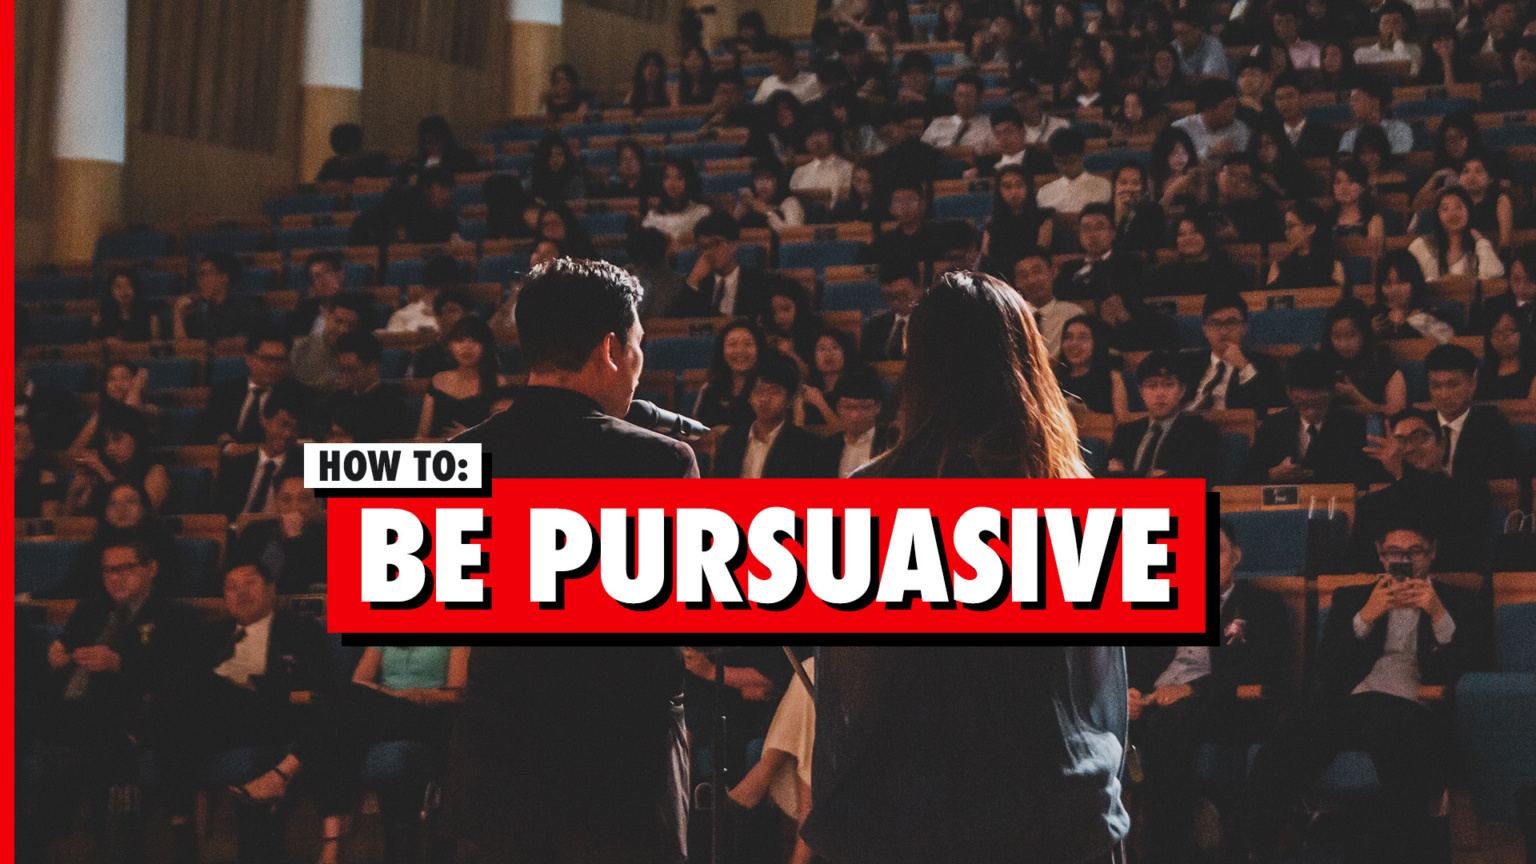 Trevor Ambrose Public Speaking Sales Training How To Be Persuasive